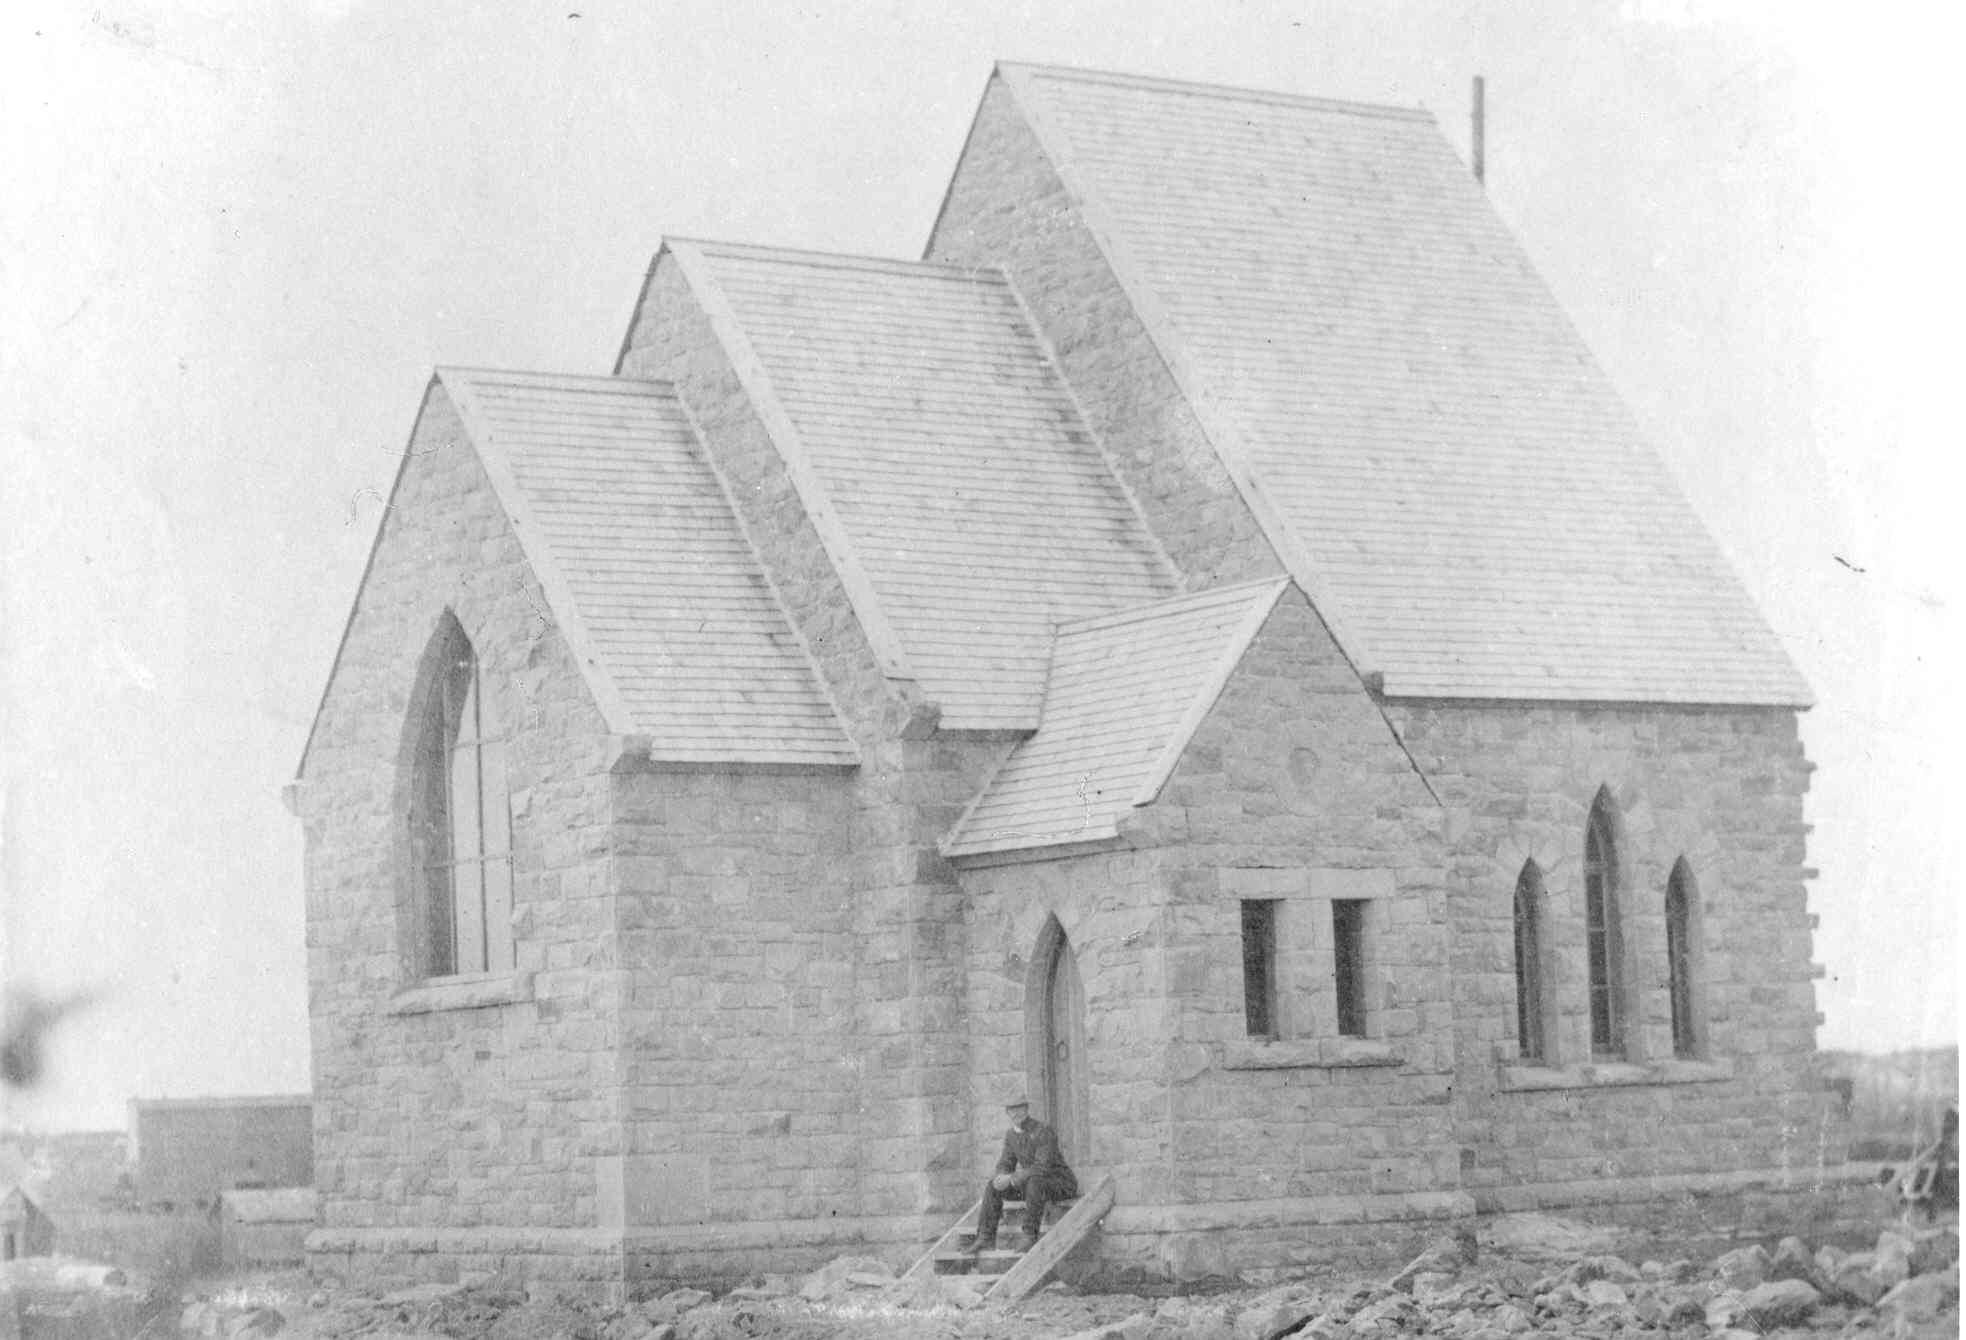 BUILDING FAITH - St. Luke’s Anglican Church under construction